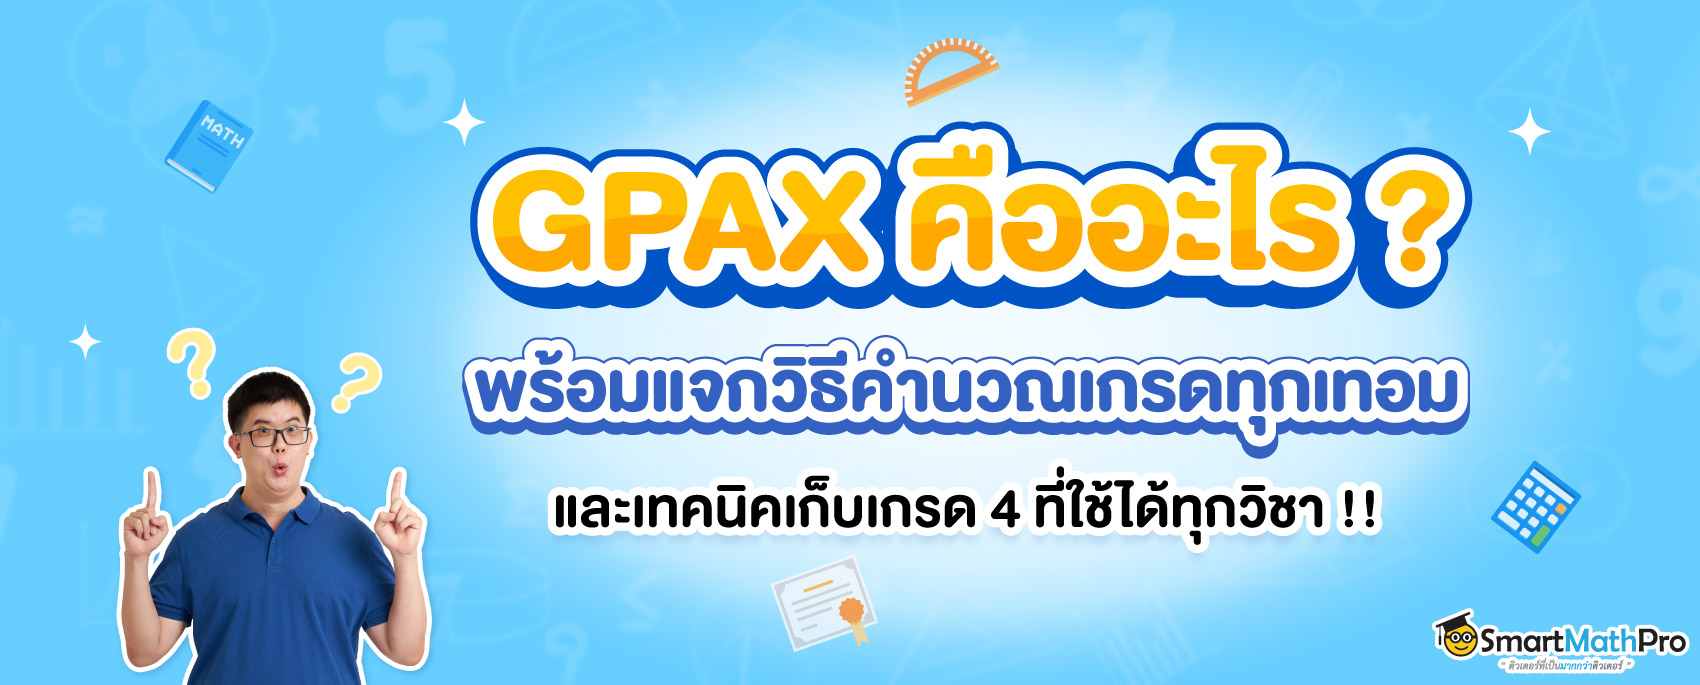 GPAX คืออะไร